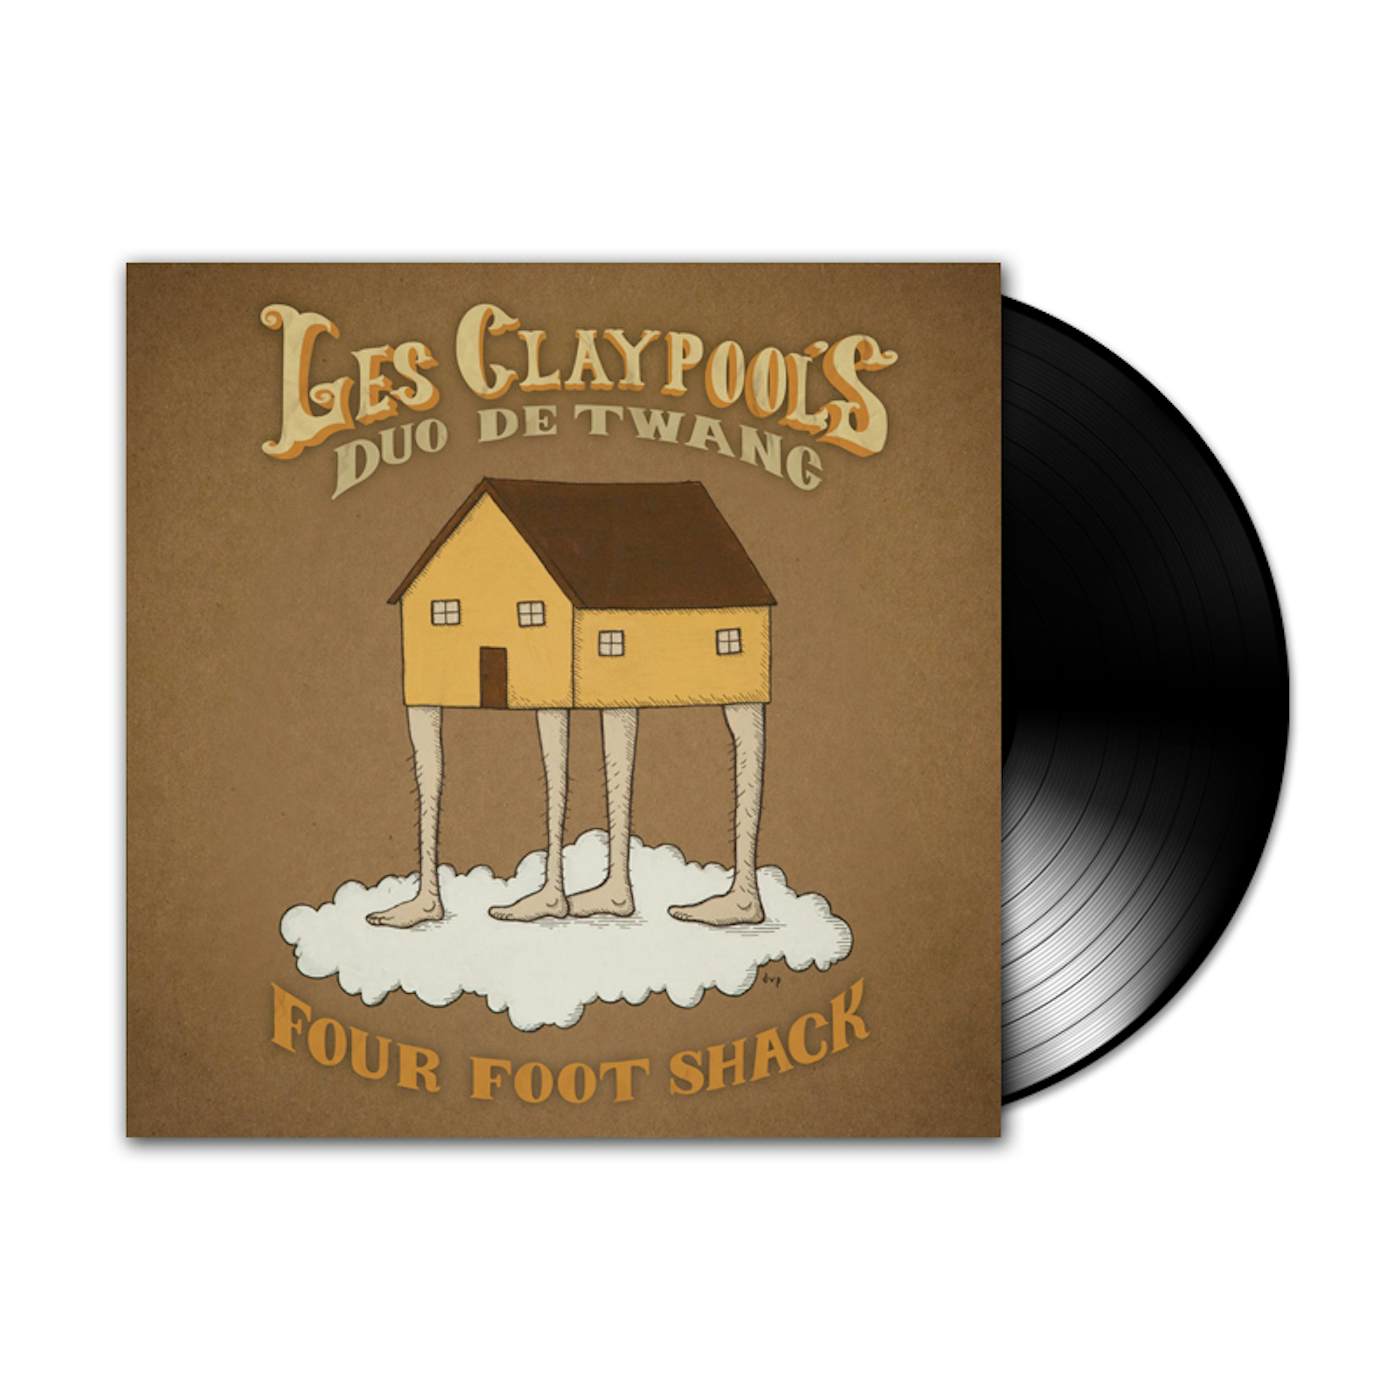 Les Claypool's Duo De Twang - Four Foot Shack LP (Vinyl)